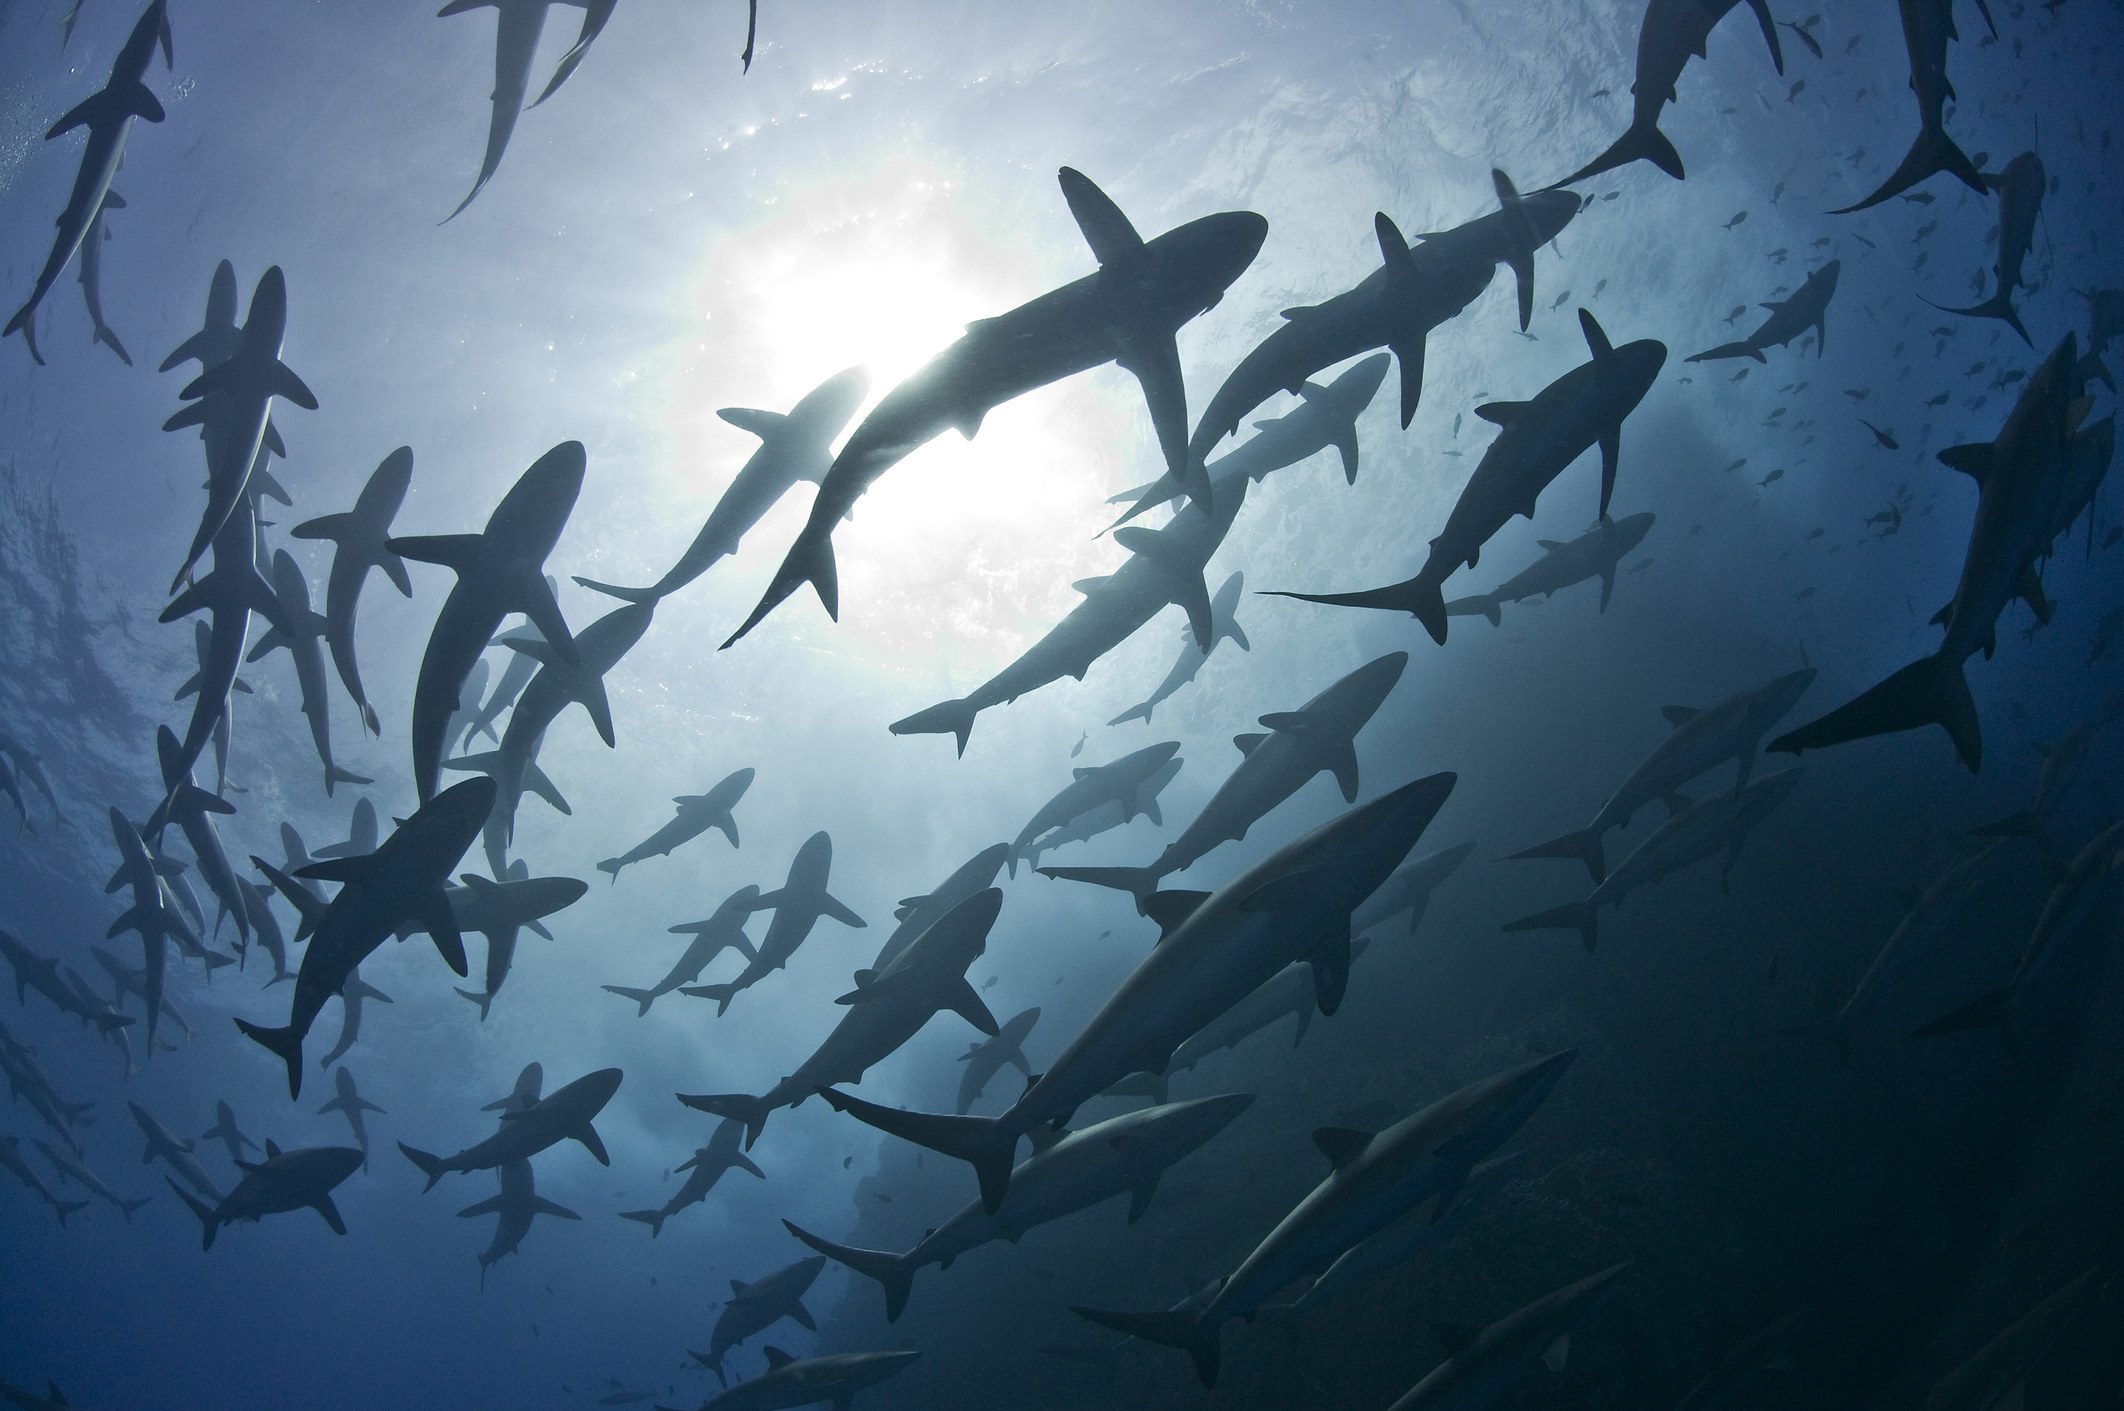 A school of sharks